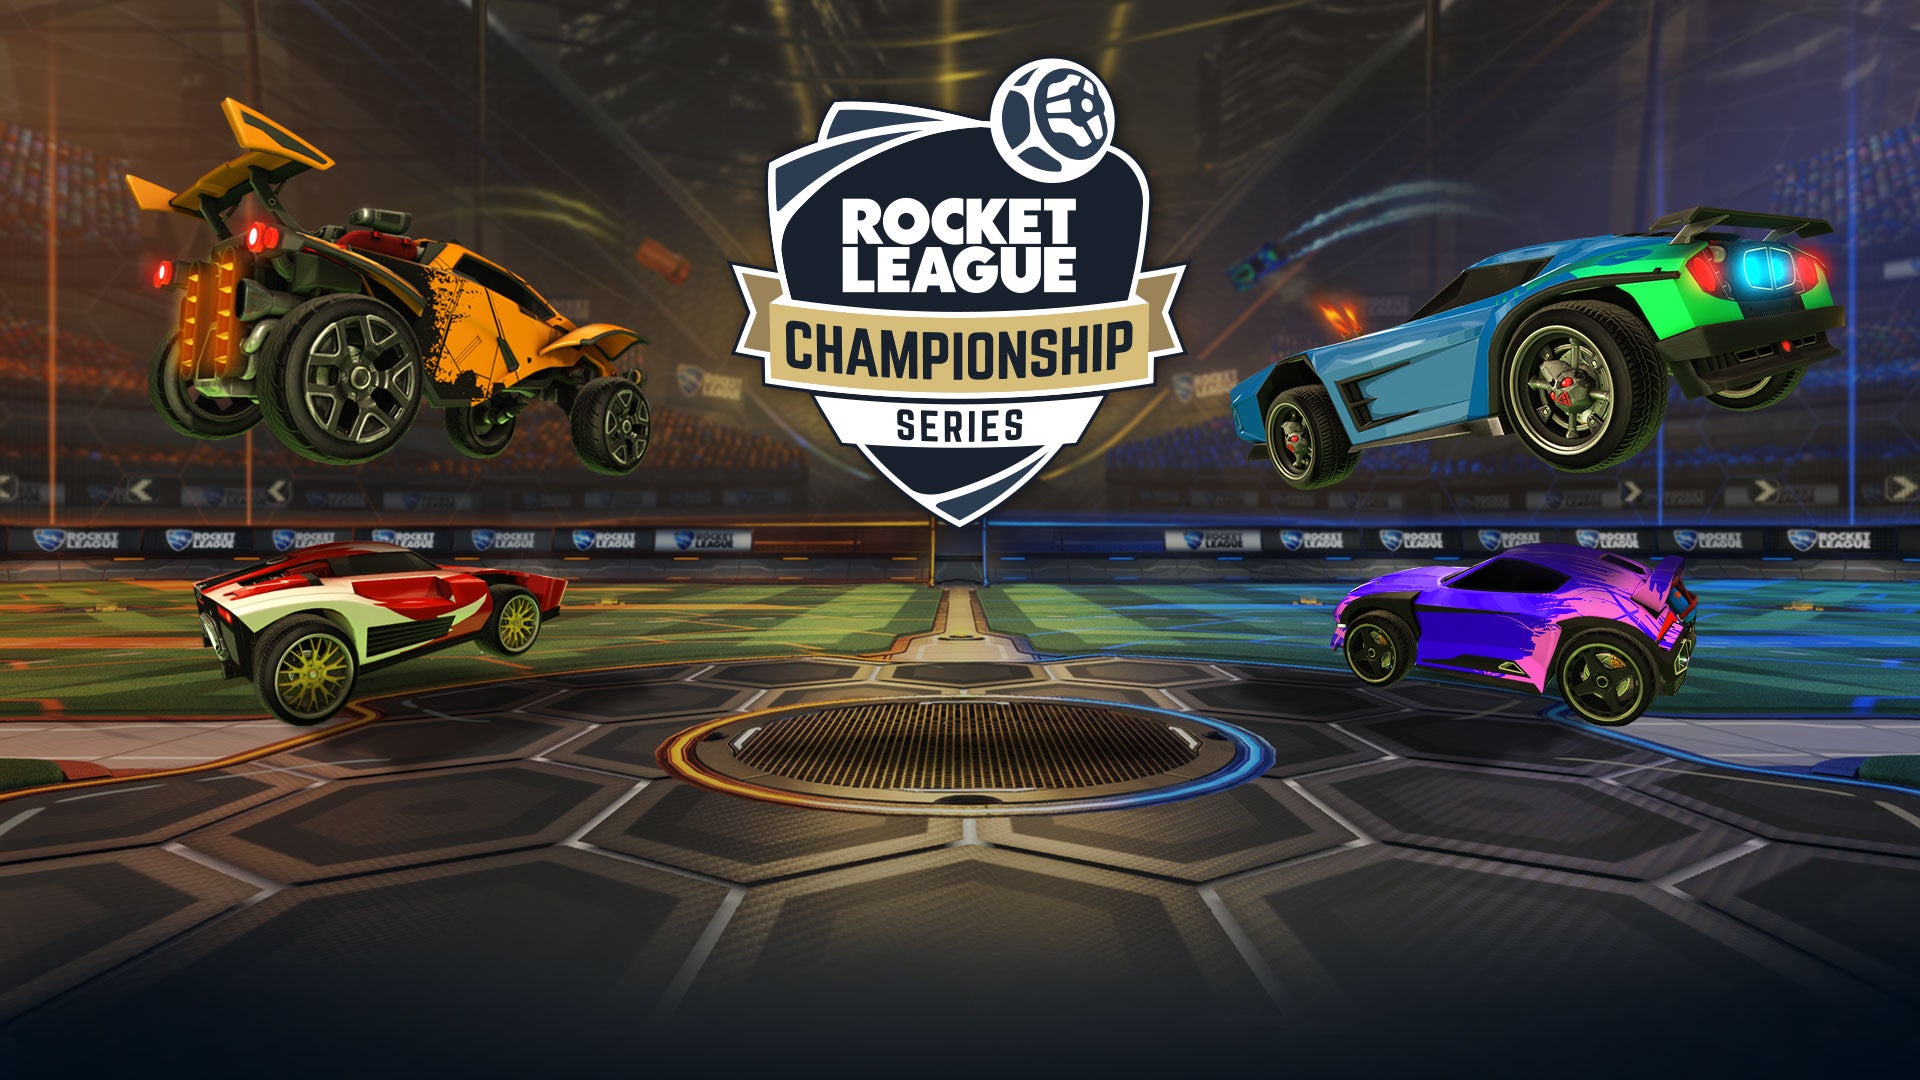 Introducing the Rocket League Championship Series Rocket League®